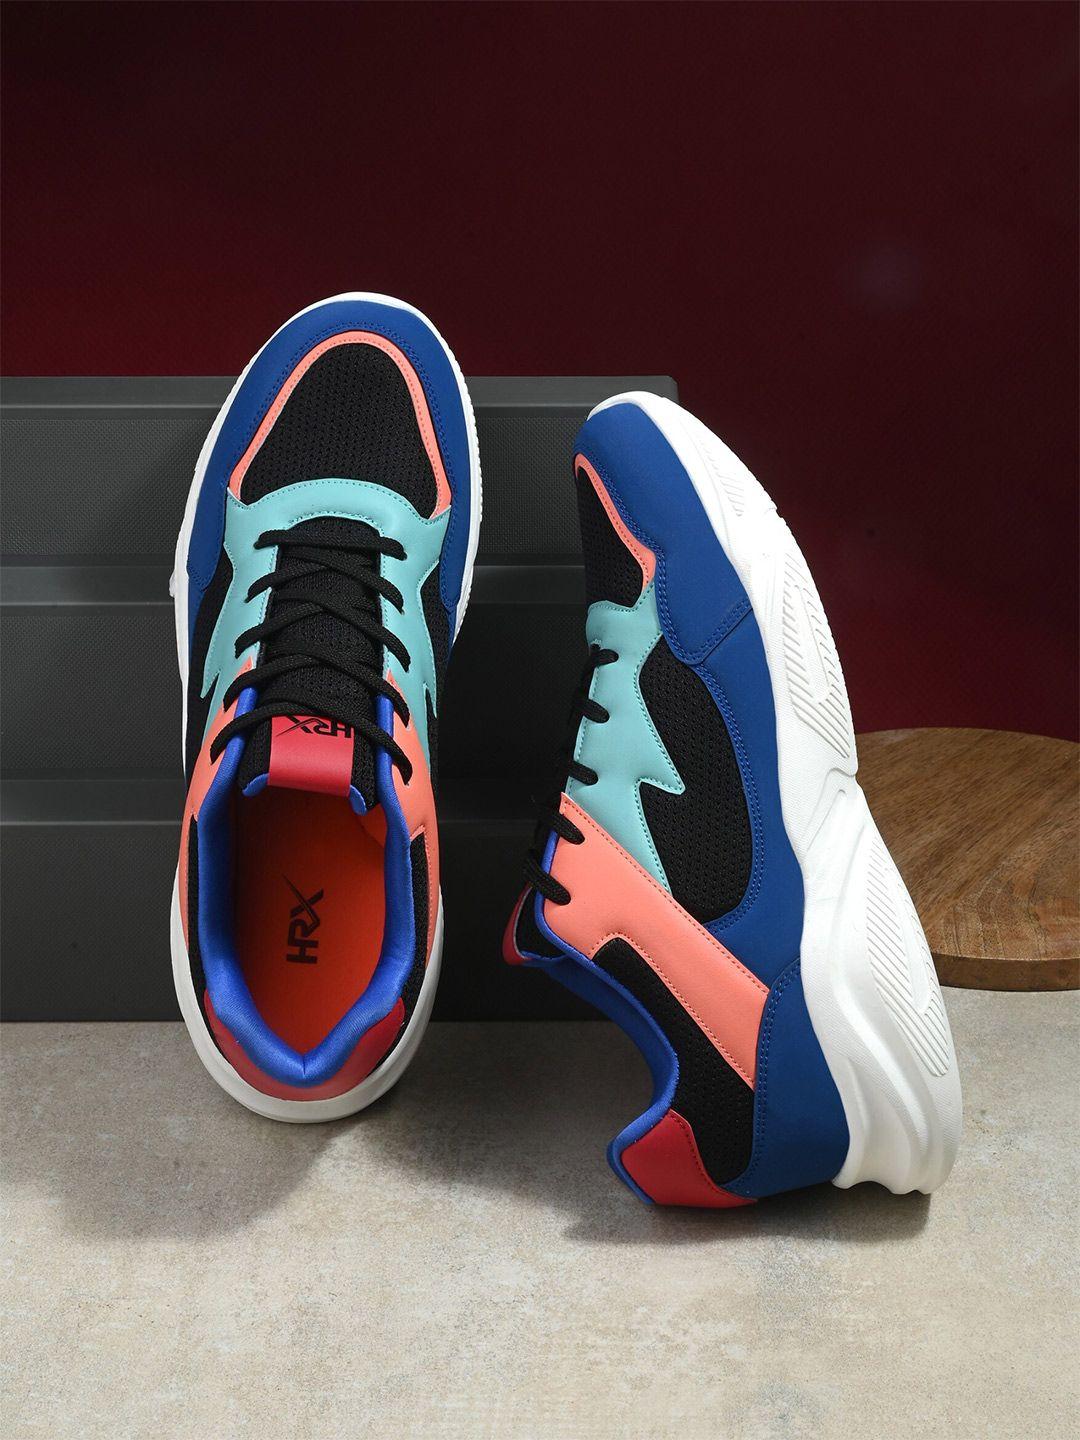 hrx-by-hrithik-roshan-men-blue-mesh-running-sports-shoes